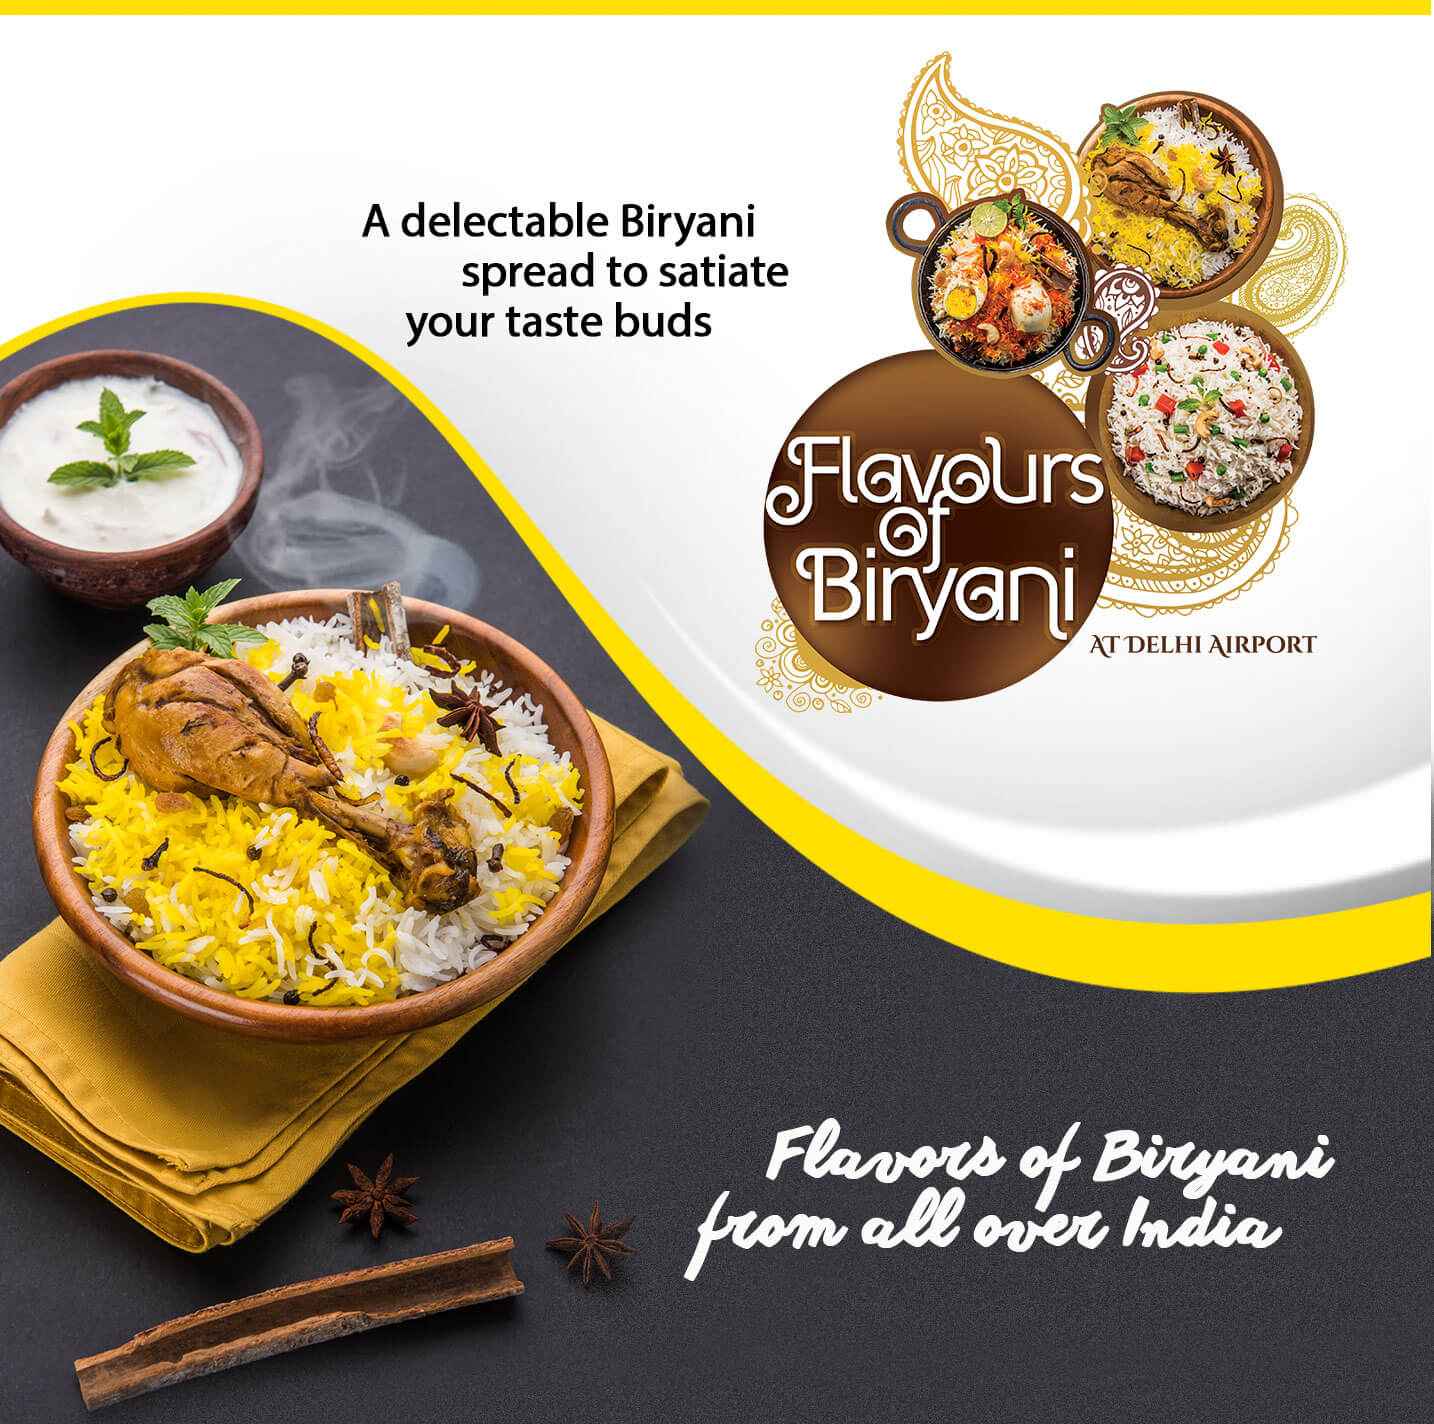 Flavours of Biryani at Delhi Airport